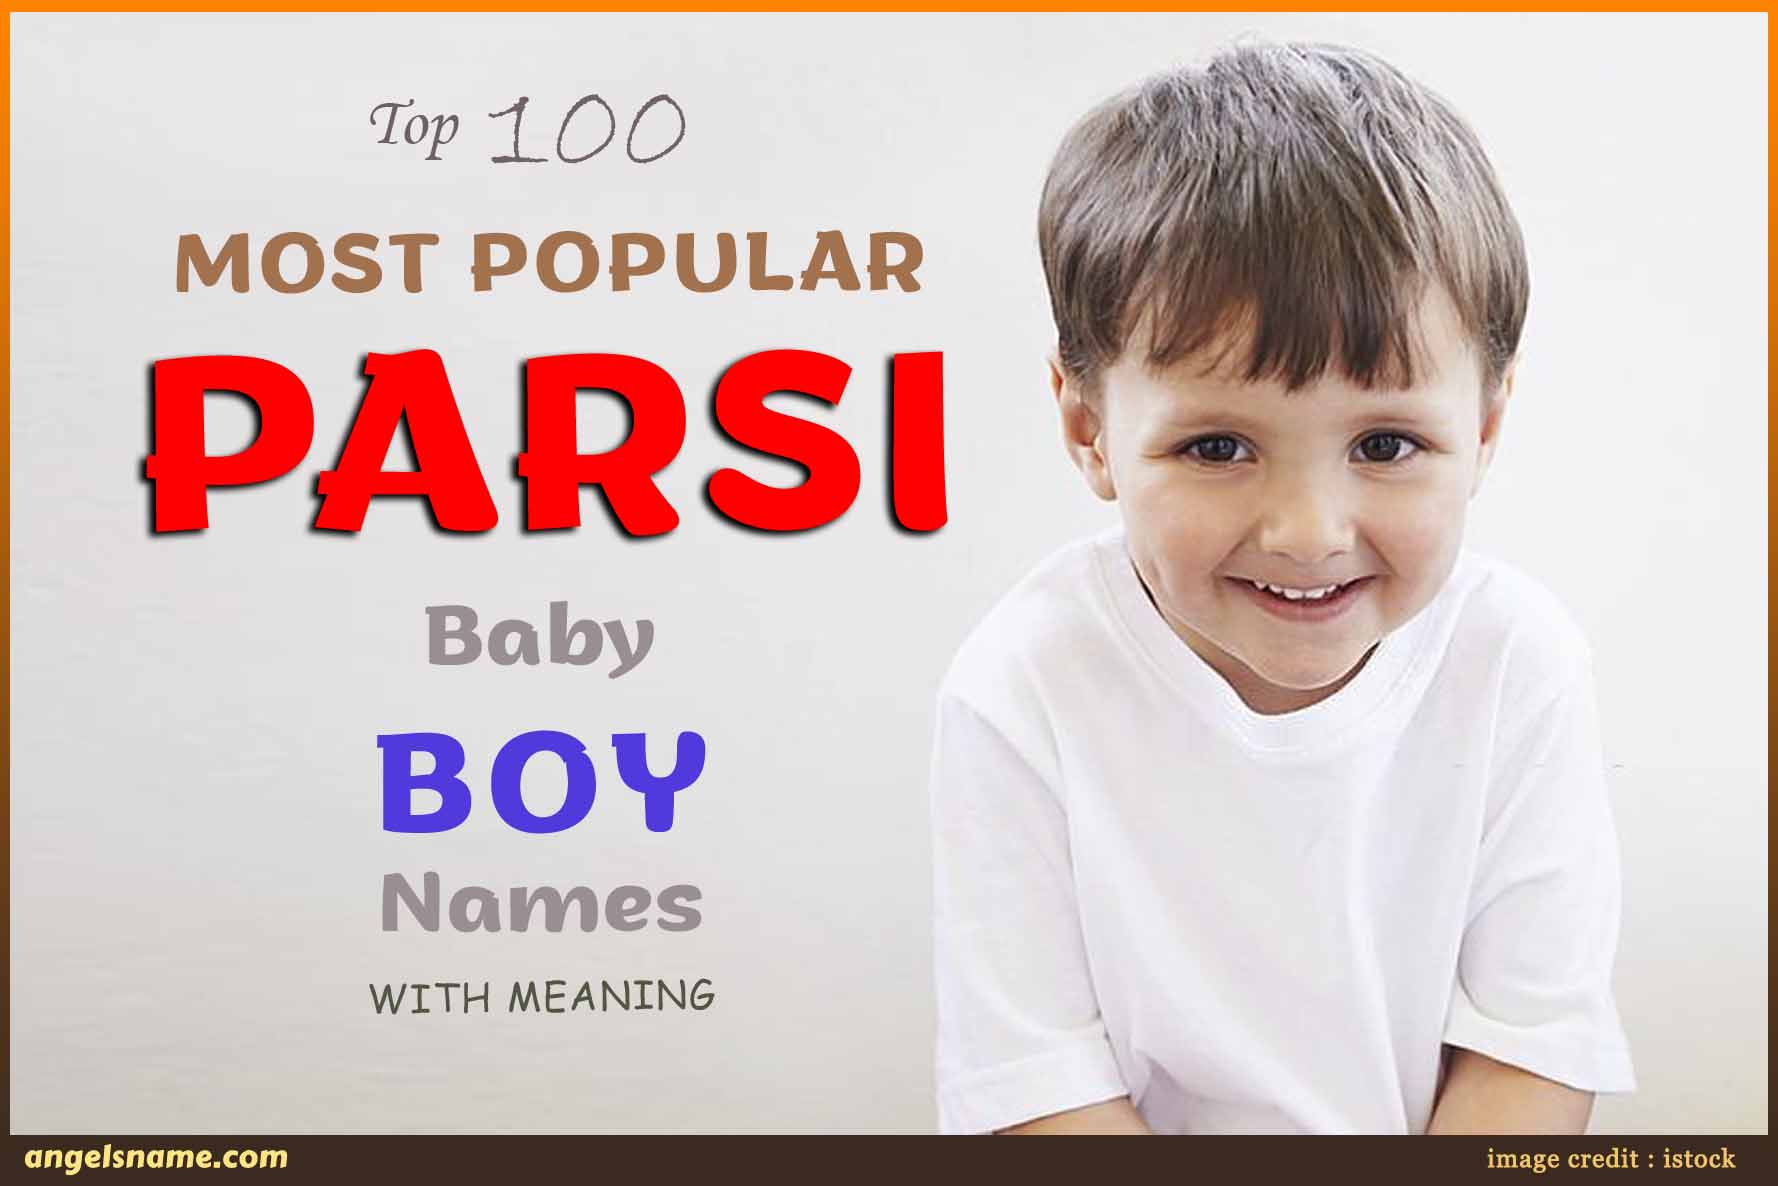 Top 100 Most Popular Parsi Baby Boy & Girl Names